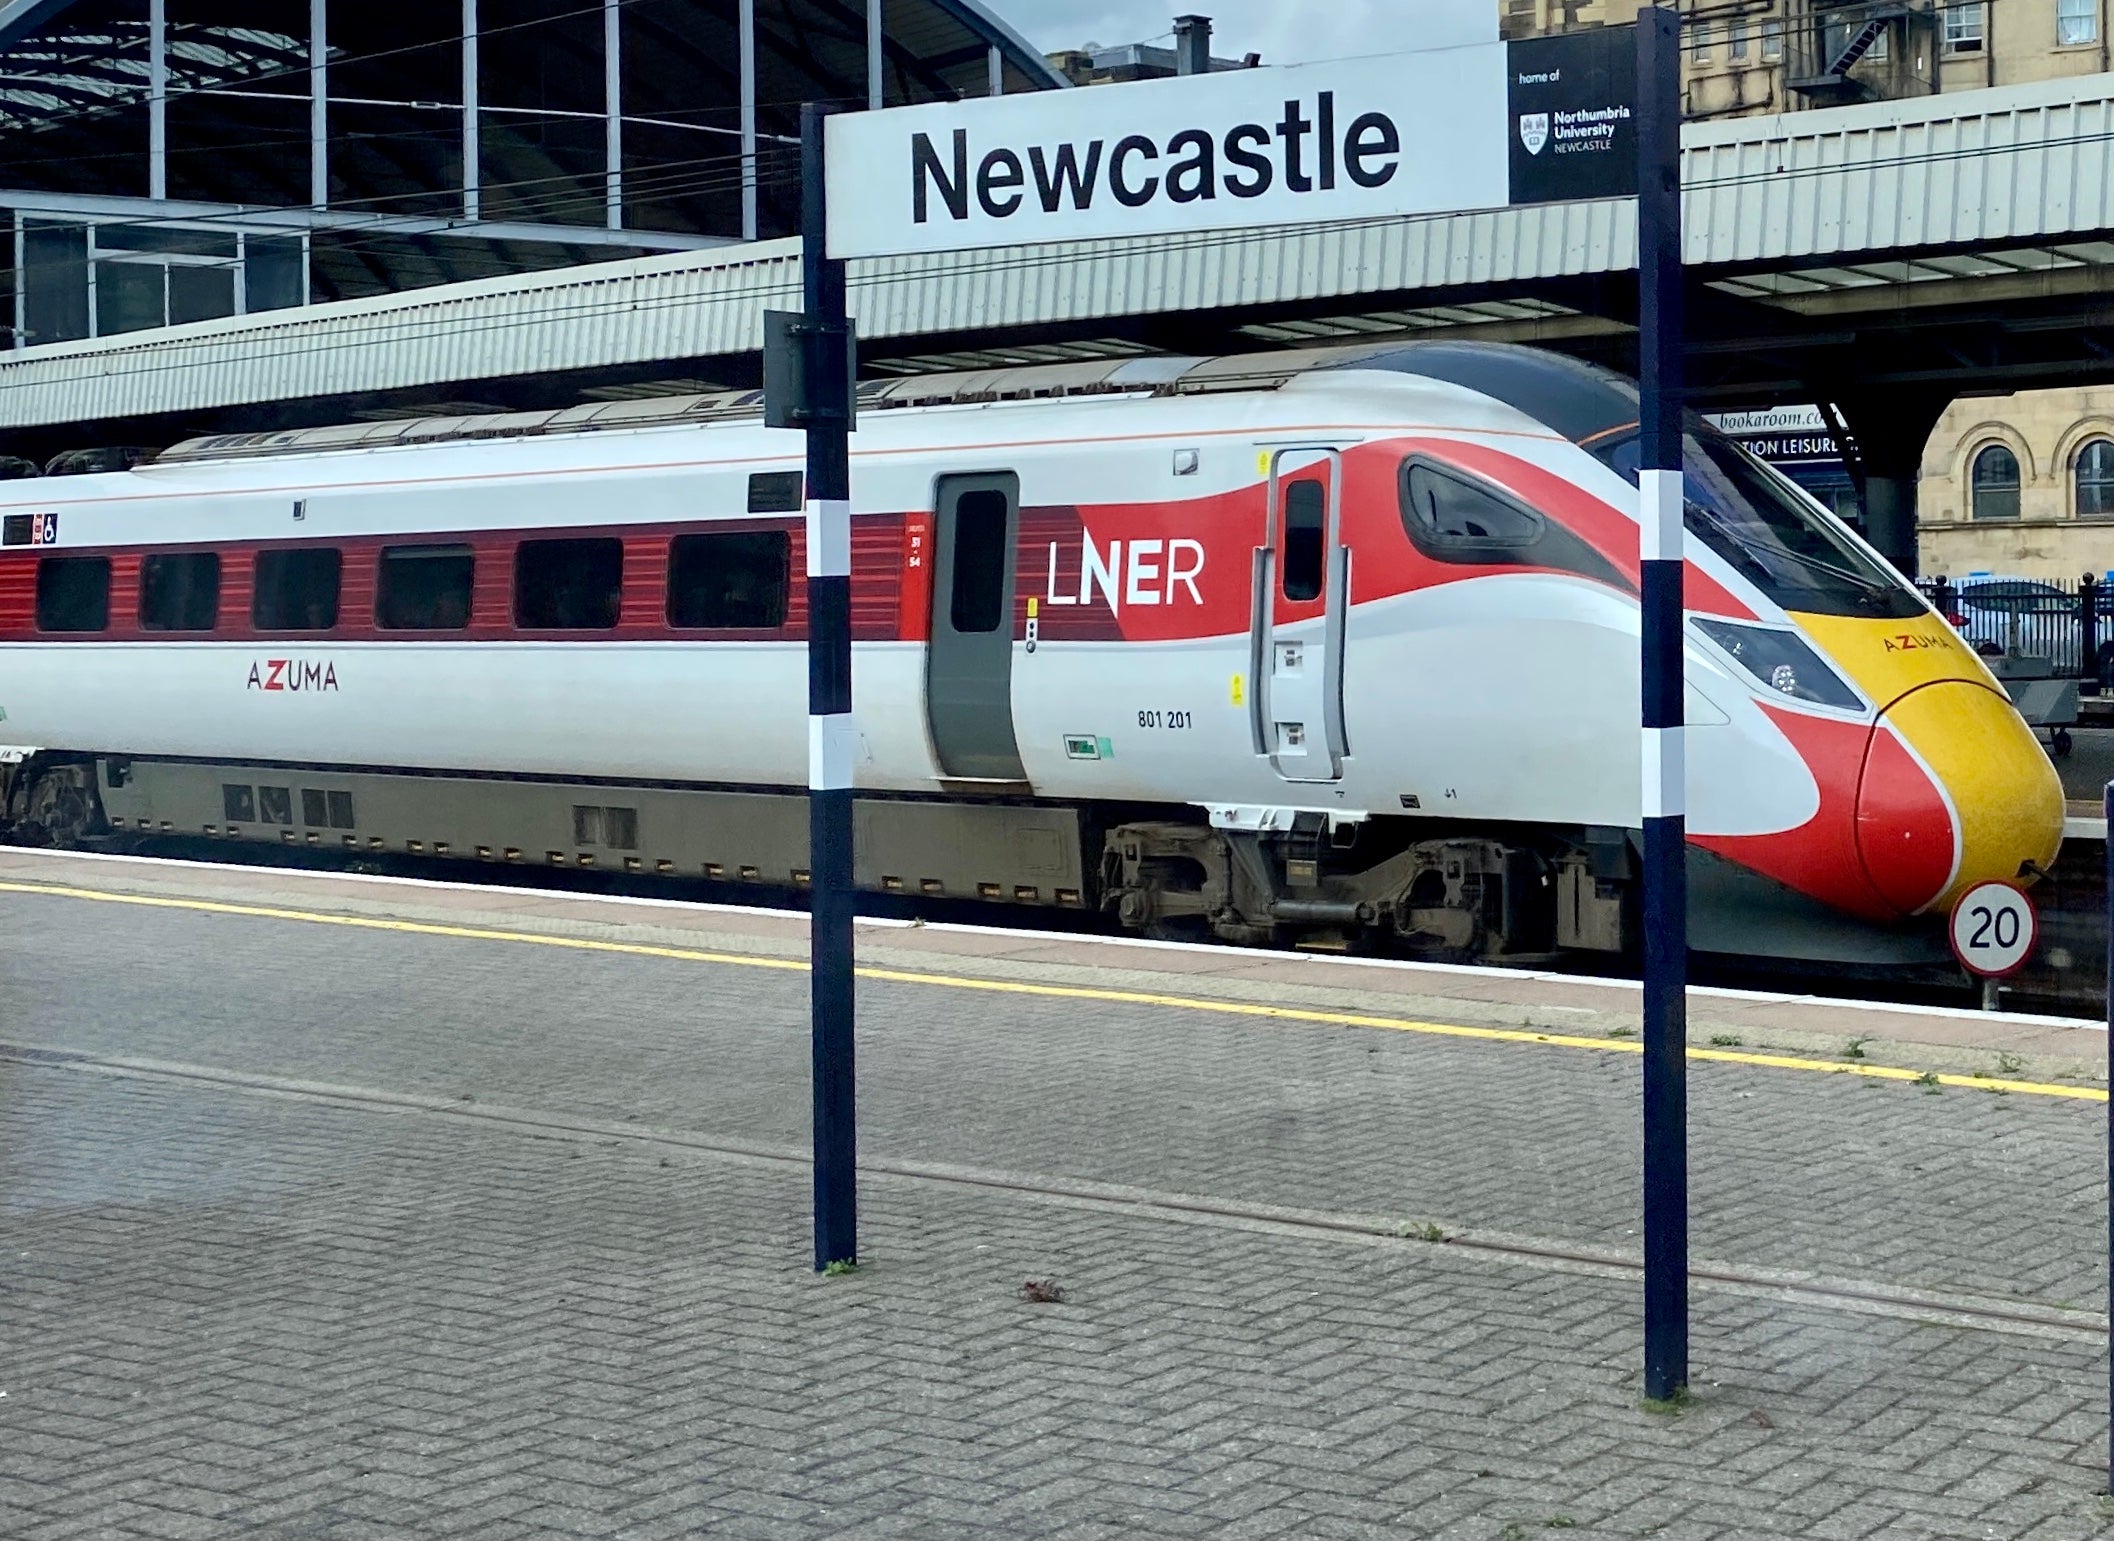 Racing certainty: an LNER Azuma train at Newcastle station, heading for Edinburgh